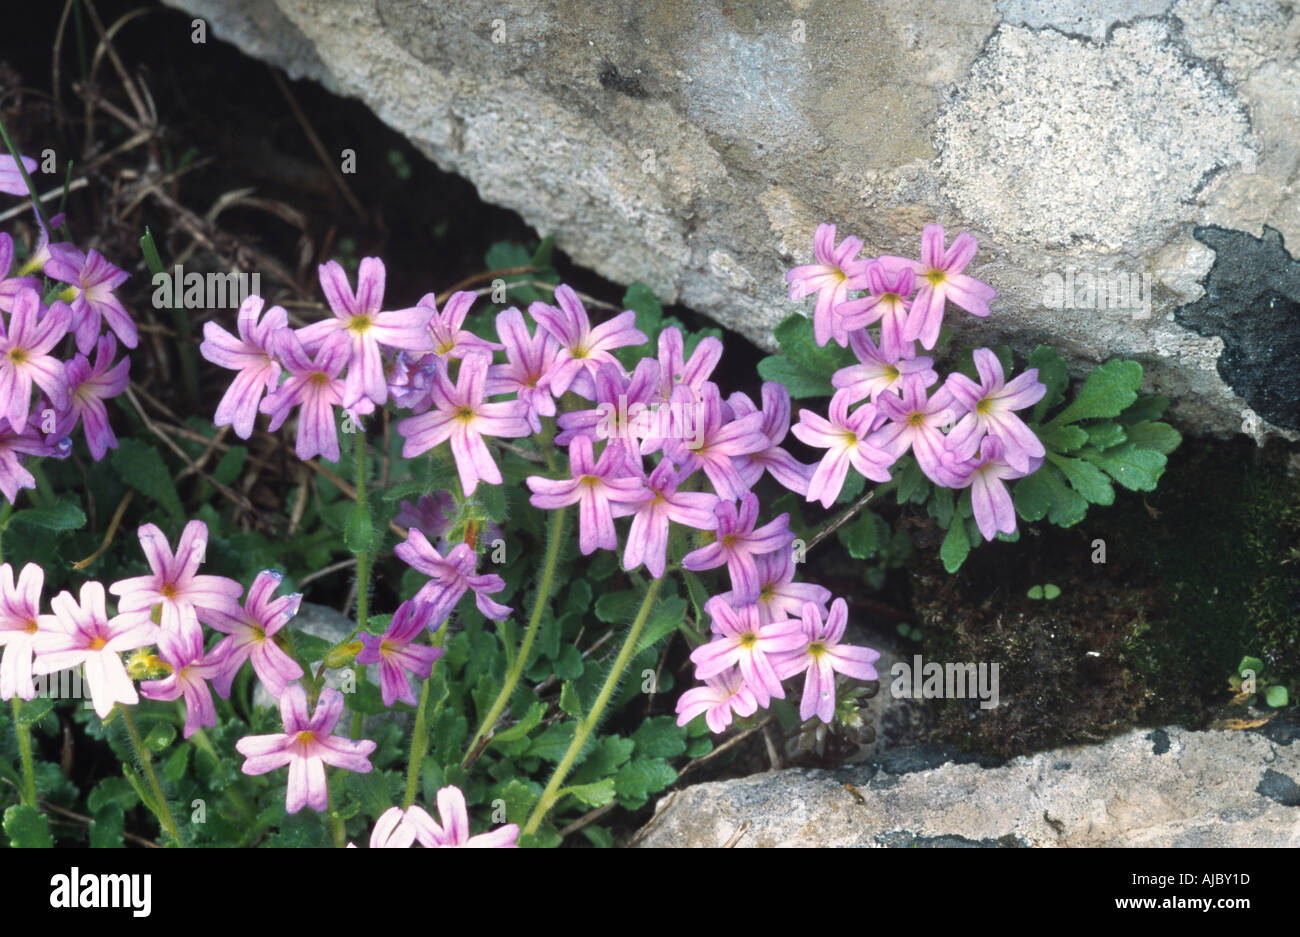 maile-hohono, flossflower (Ageratum houstonianum, Ageratum conyzoides), between rocks, blooming, Switzerland Stock Photo